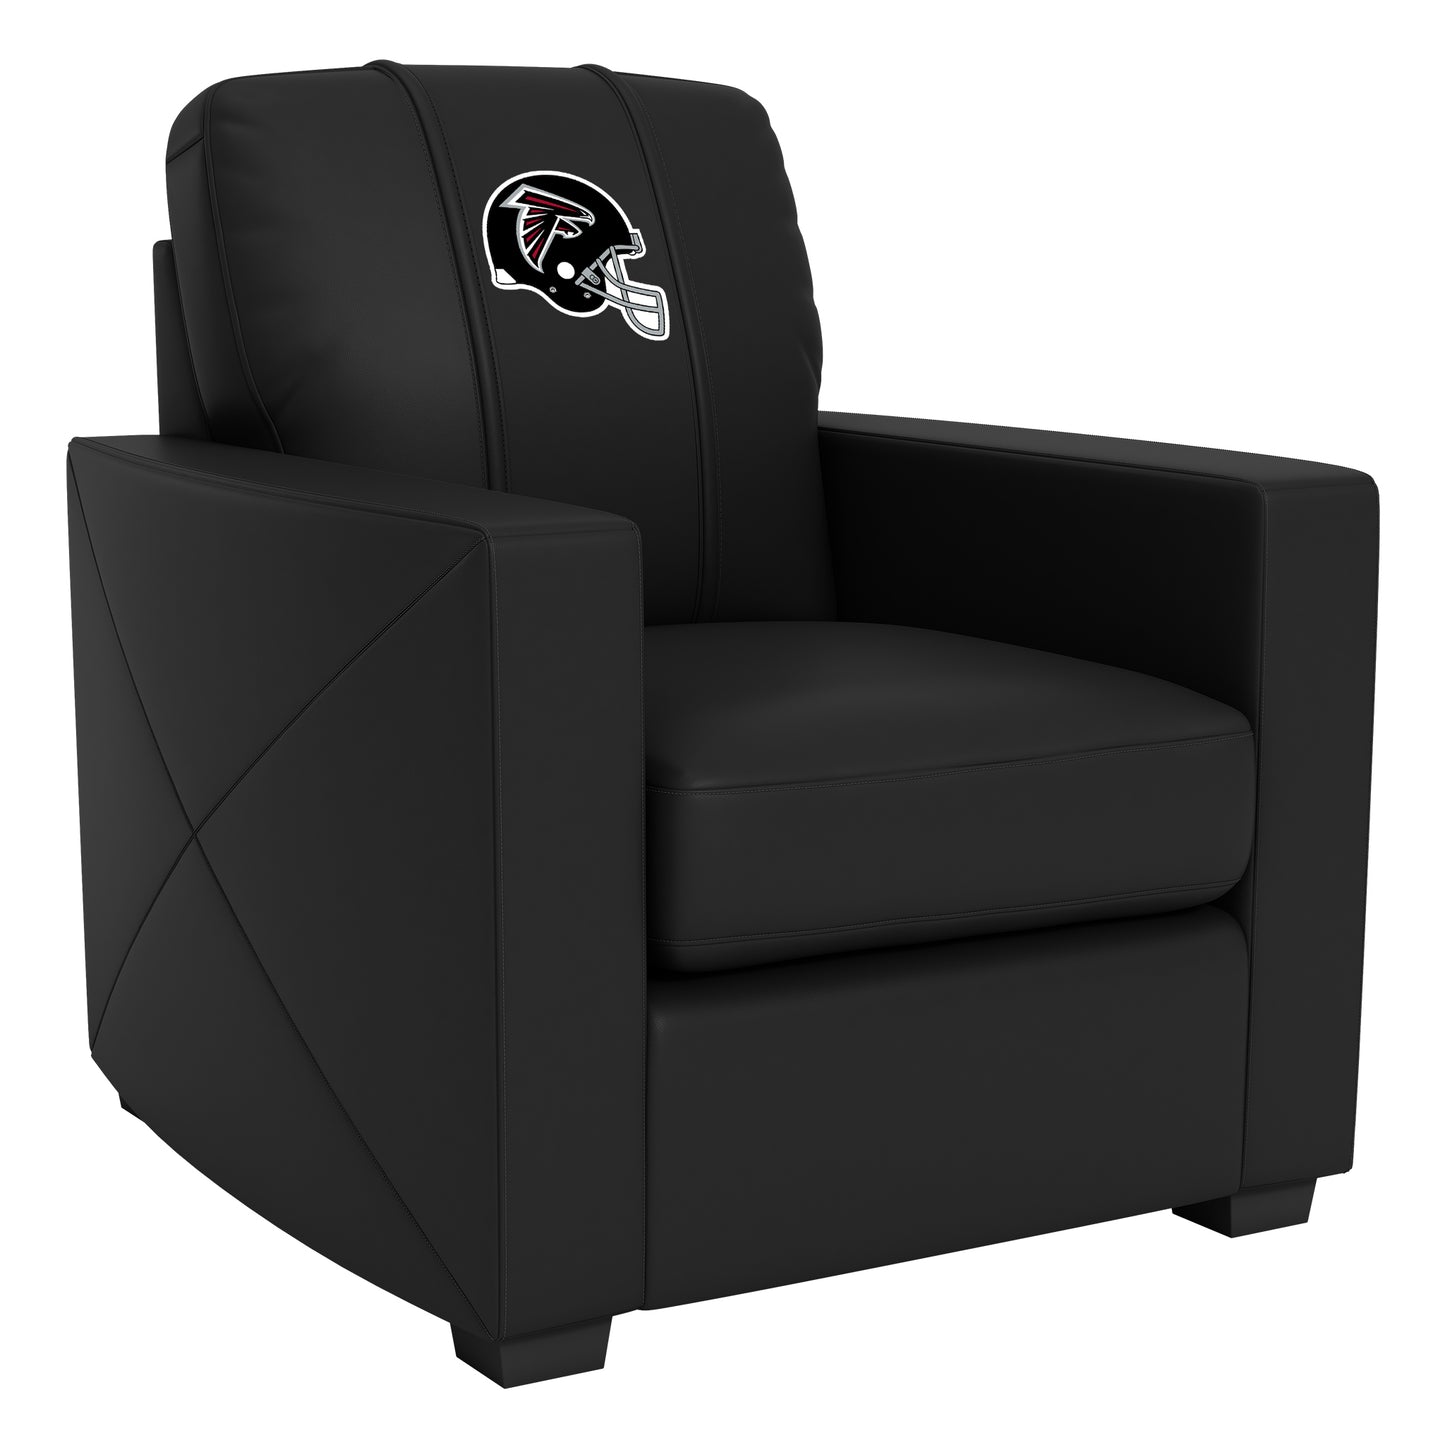 Silver Club Chair with Atlanta Falcons Helmet Logo